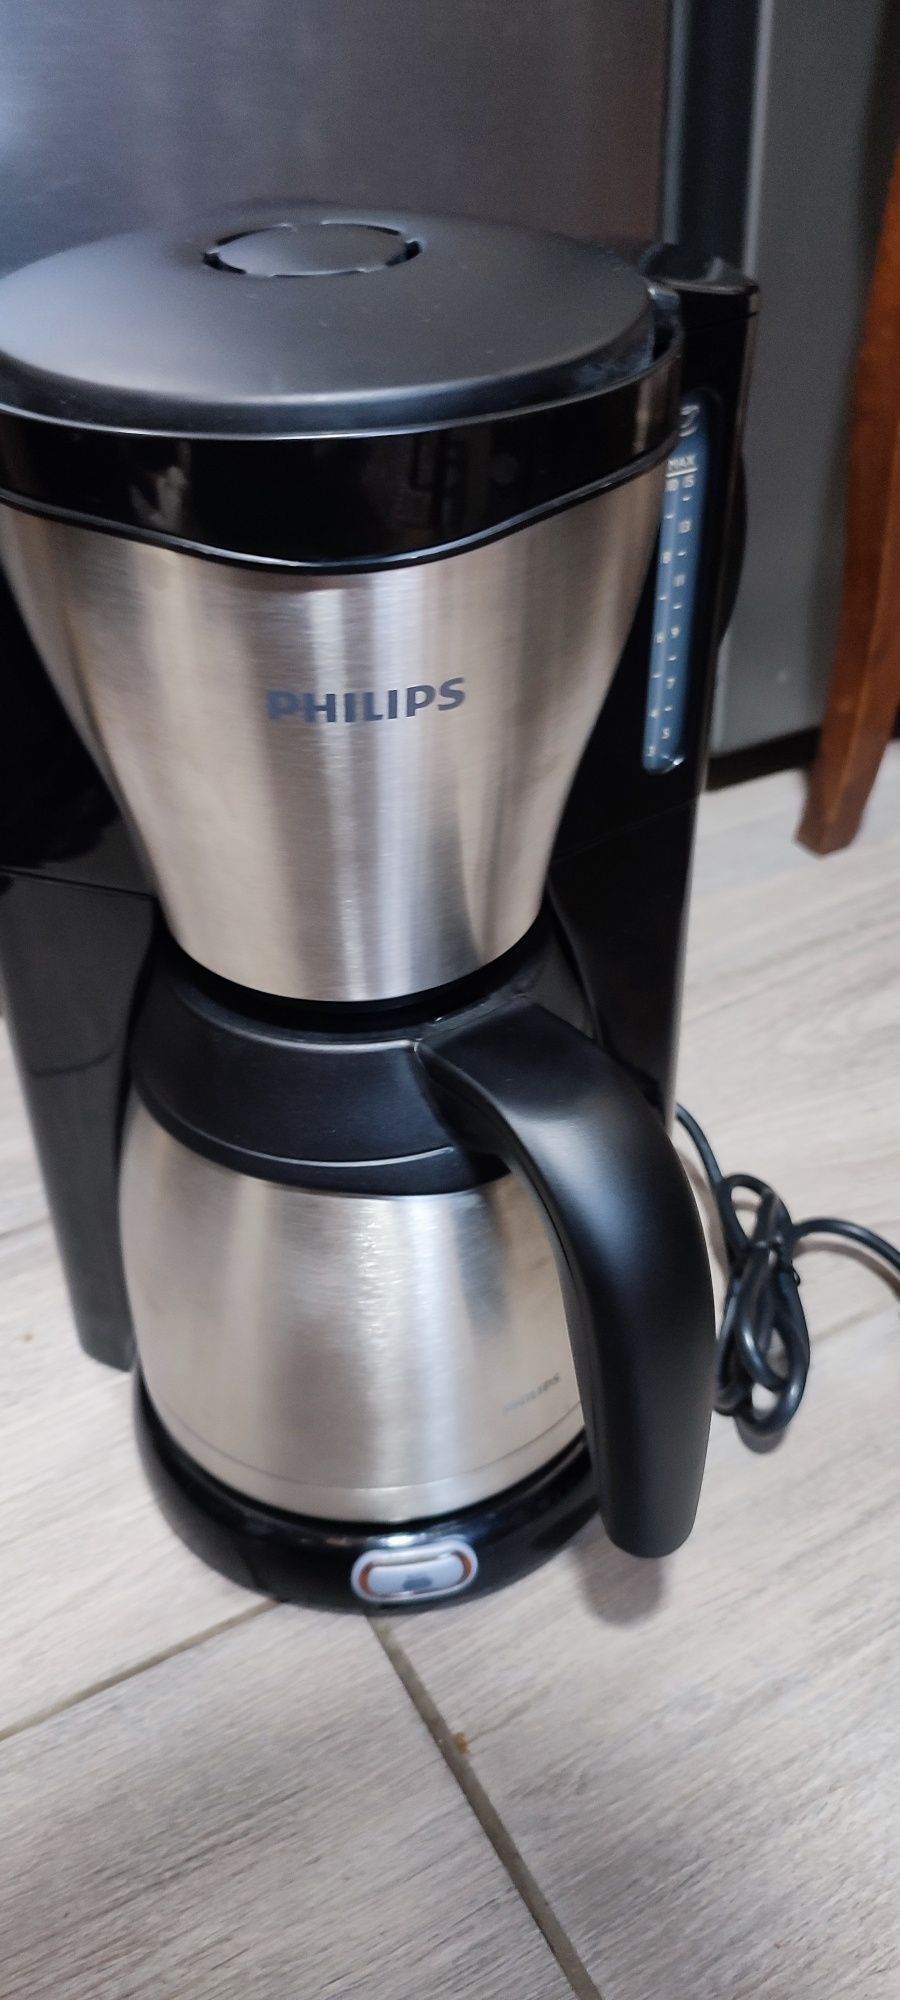 Крапельна кавоварка Philips HD7546/20